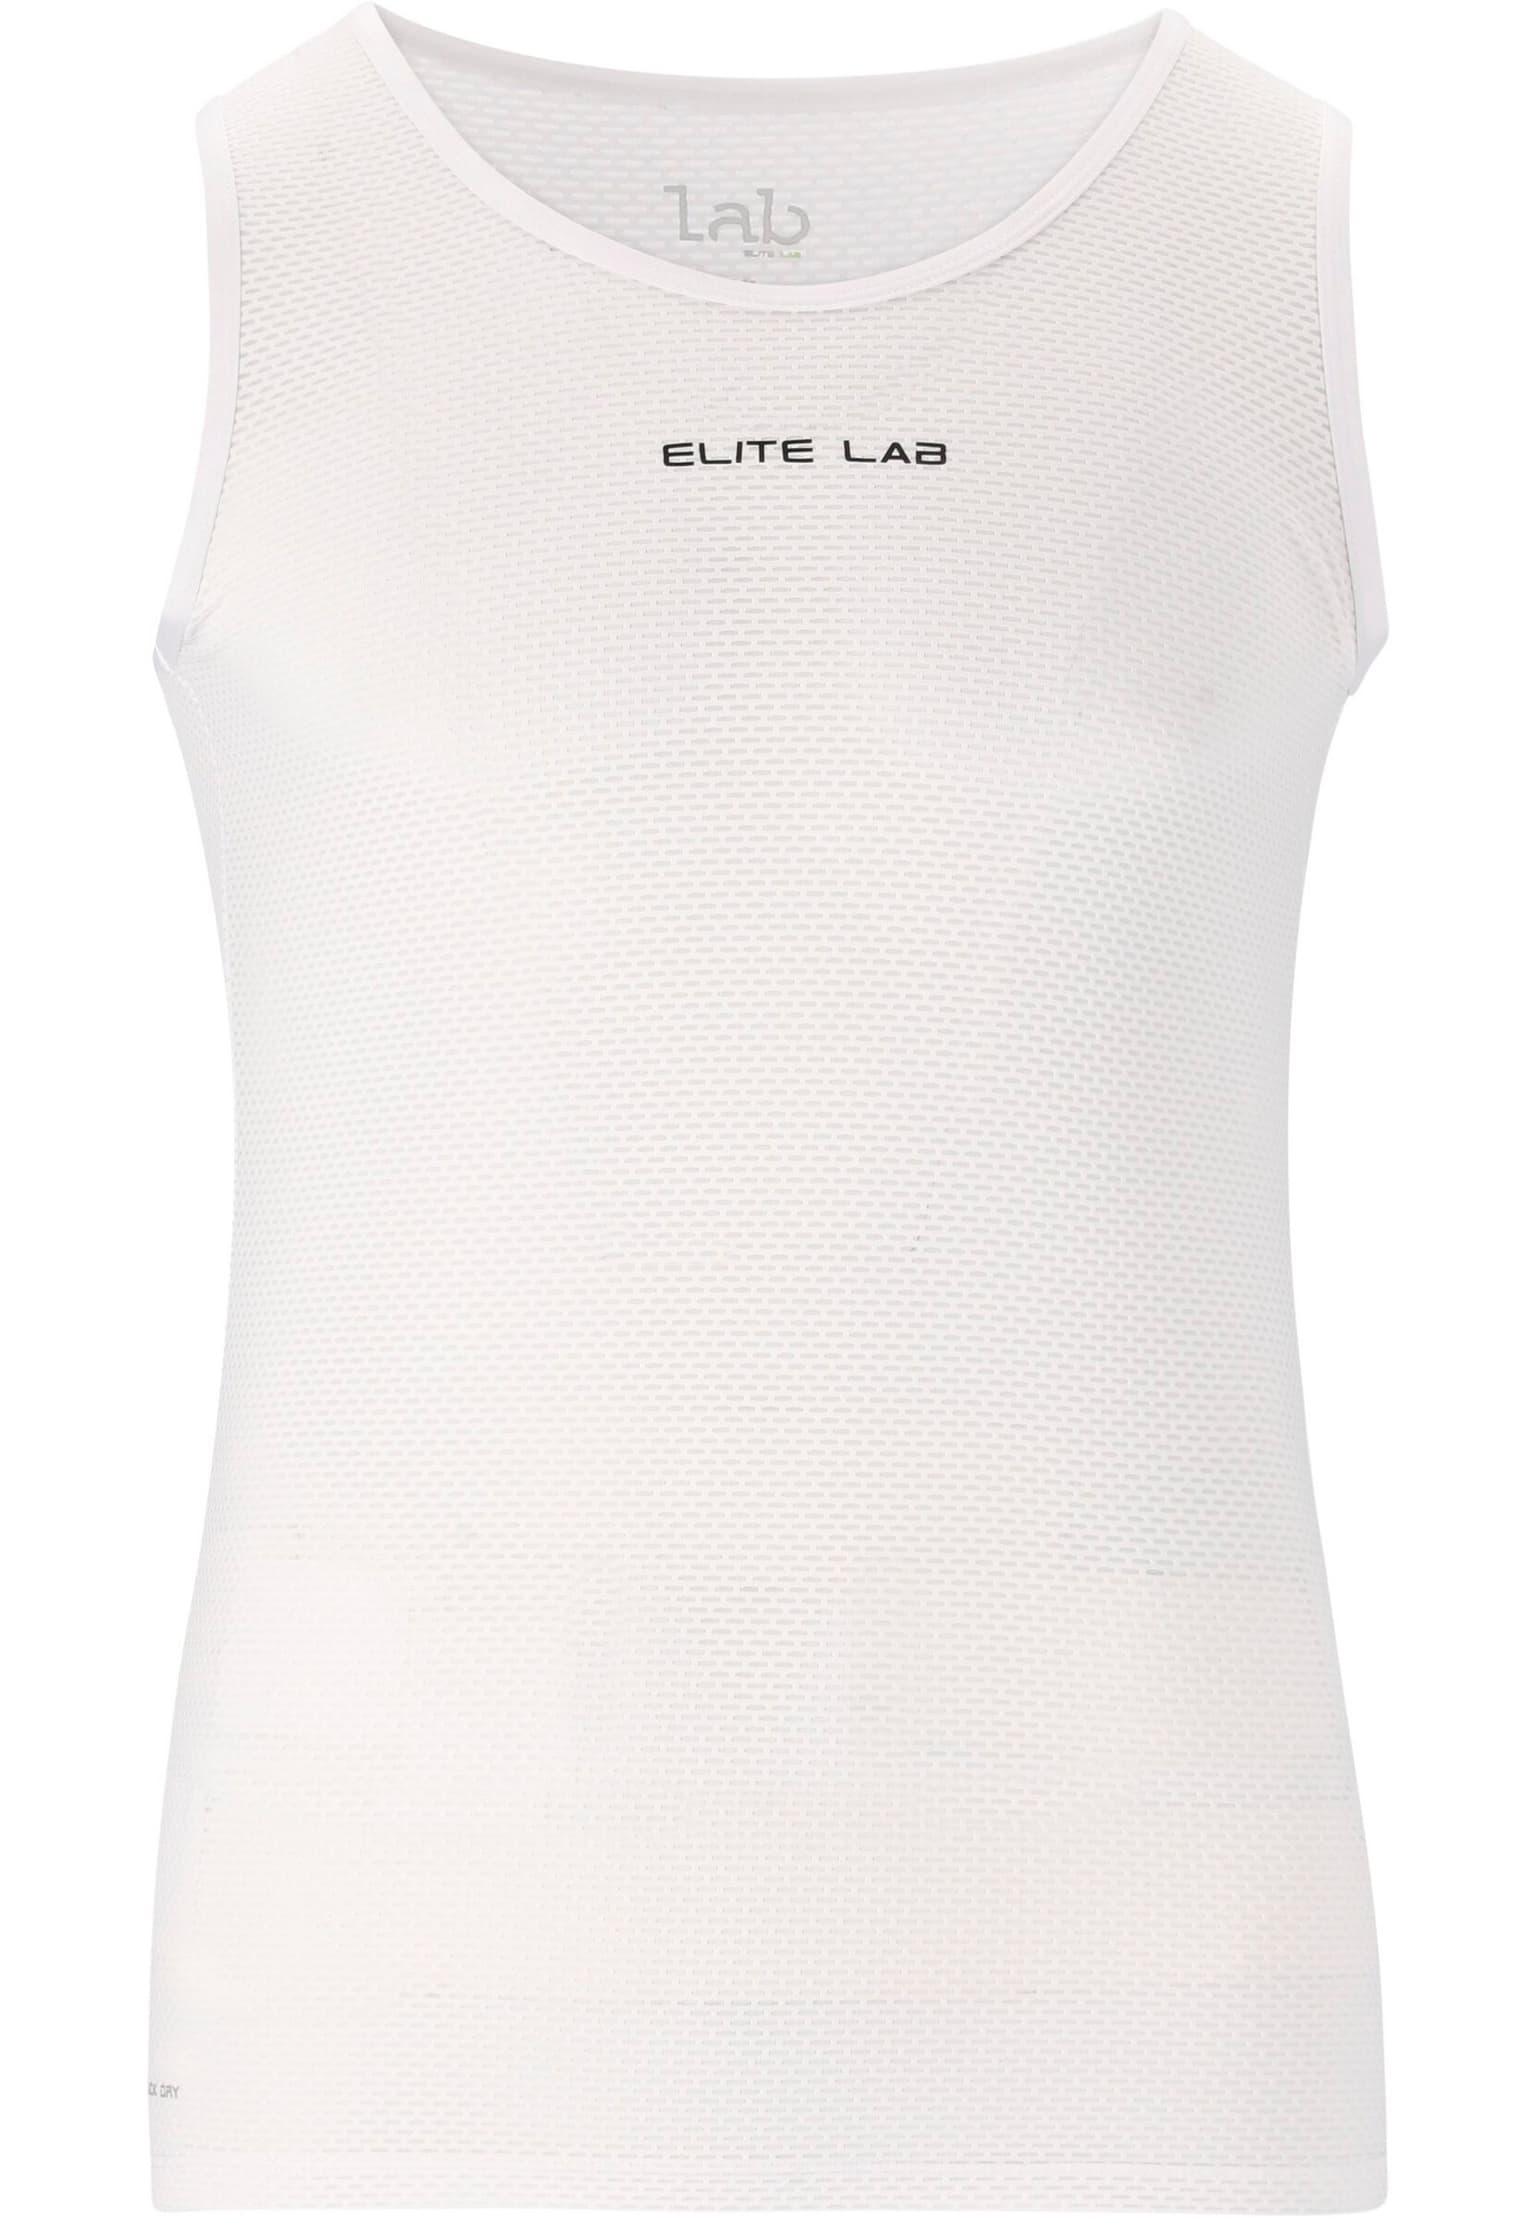 Elite Lab Elite Lab Bike Elite X1 Mesh Tech Sleeveless Baselayer Thermoshirt blanc 1